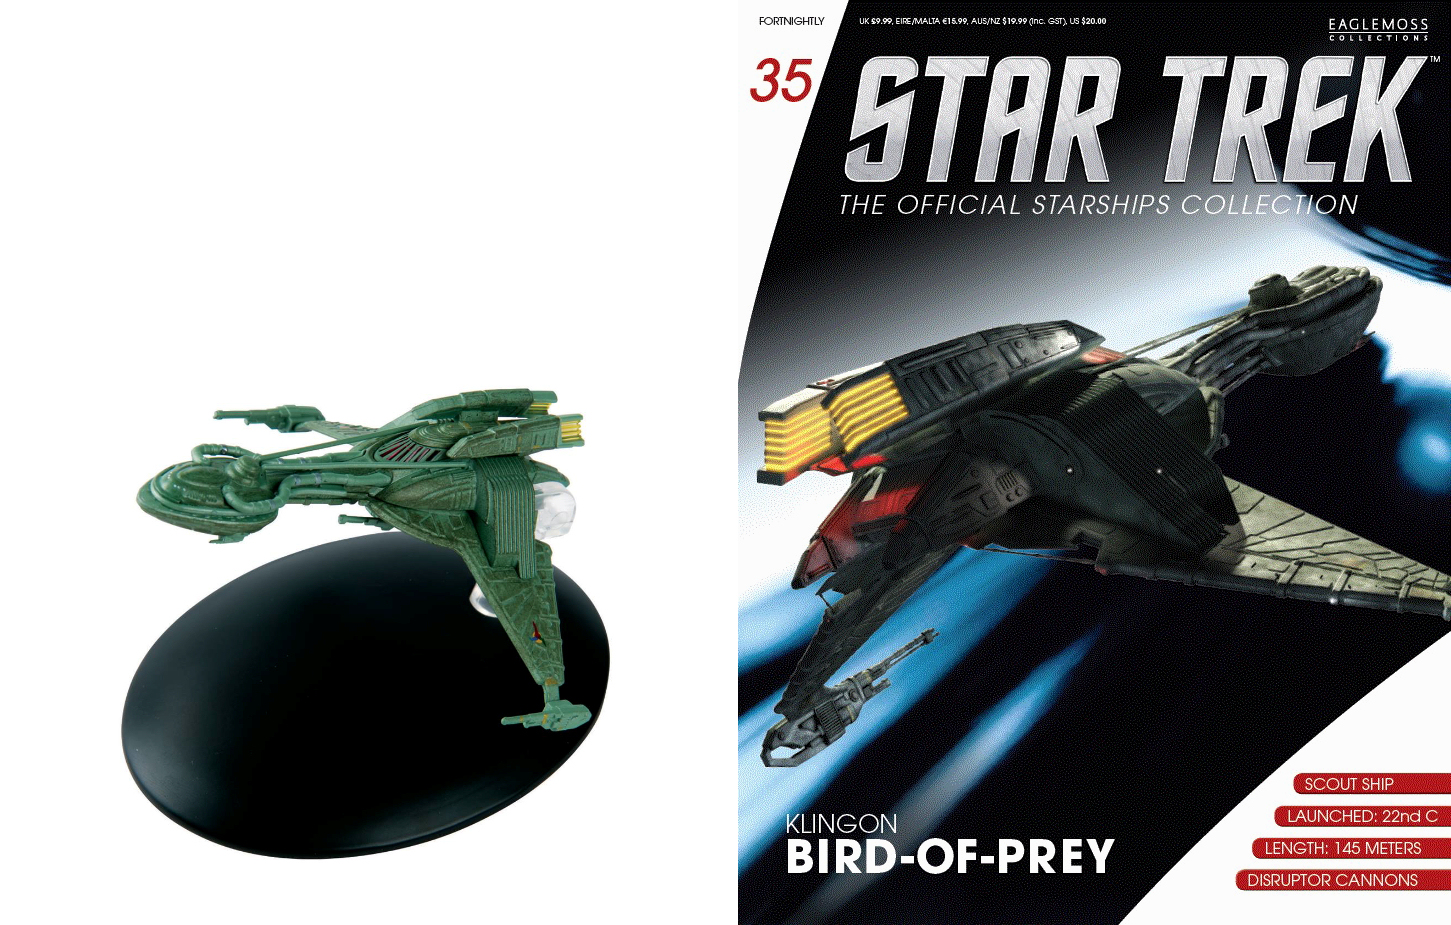 #88 Star Trek Vahklas Vulcan Transport Die Cast Metal Ship-UK/Eaglemoss w Mag 